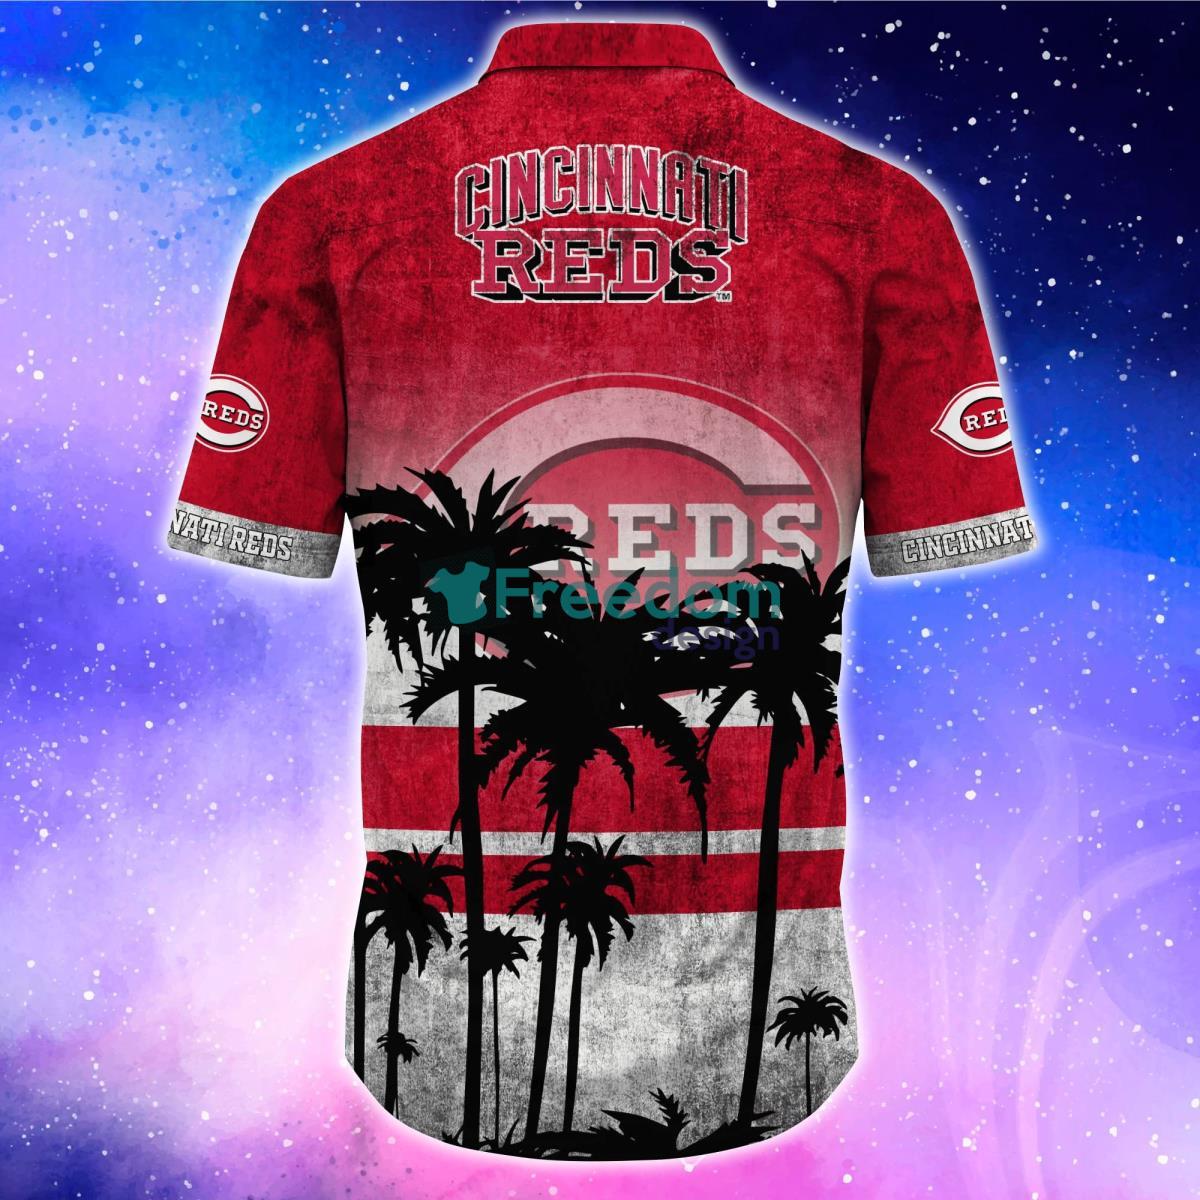 Cincinnati Reds MLB Trending Hawaiian Shirt And Shorts For Fans